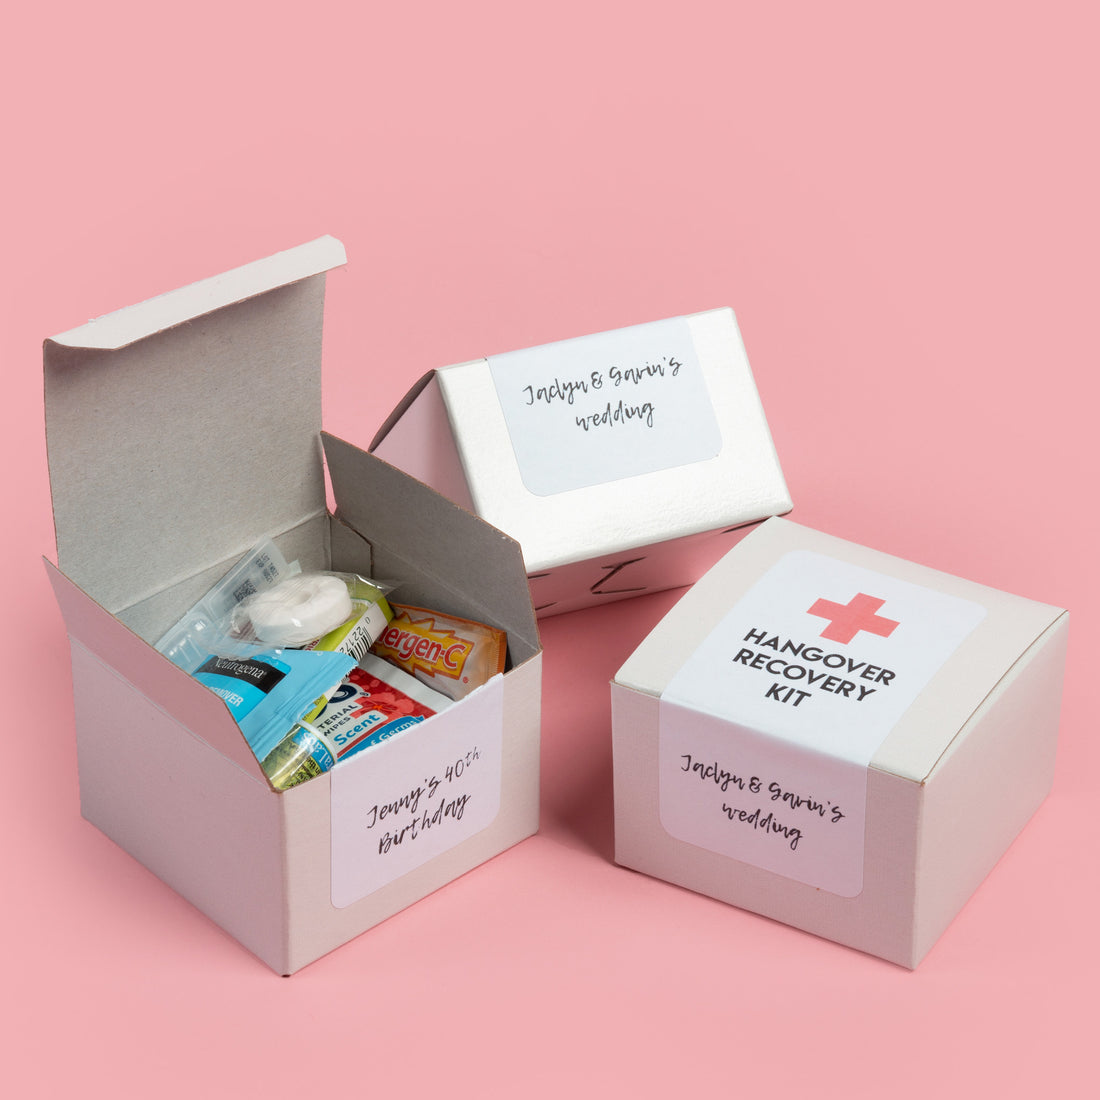 Hangover Relief Kit Favor Box